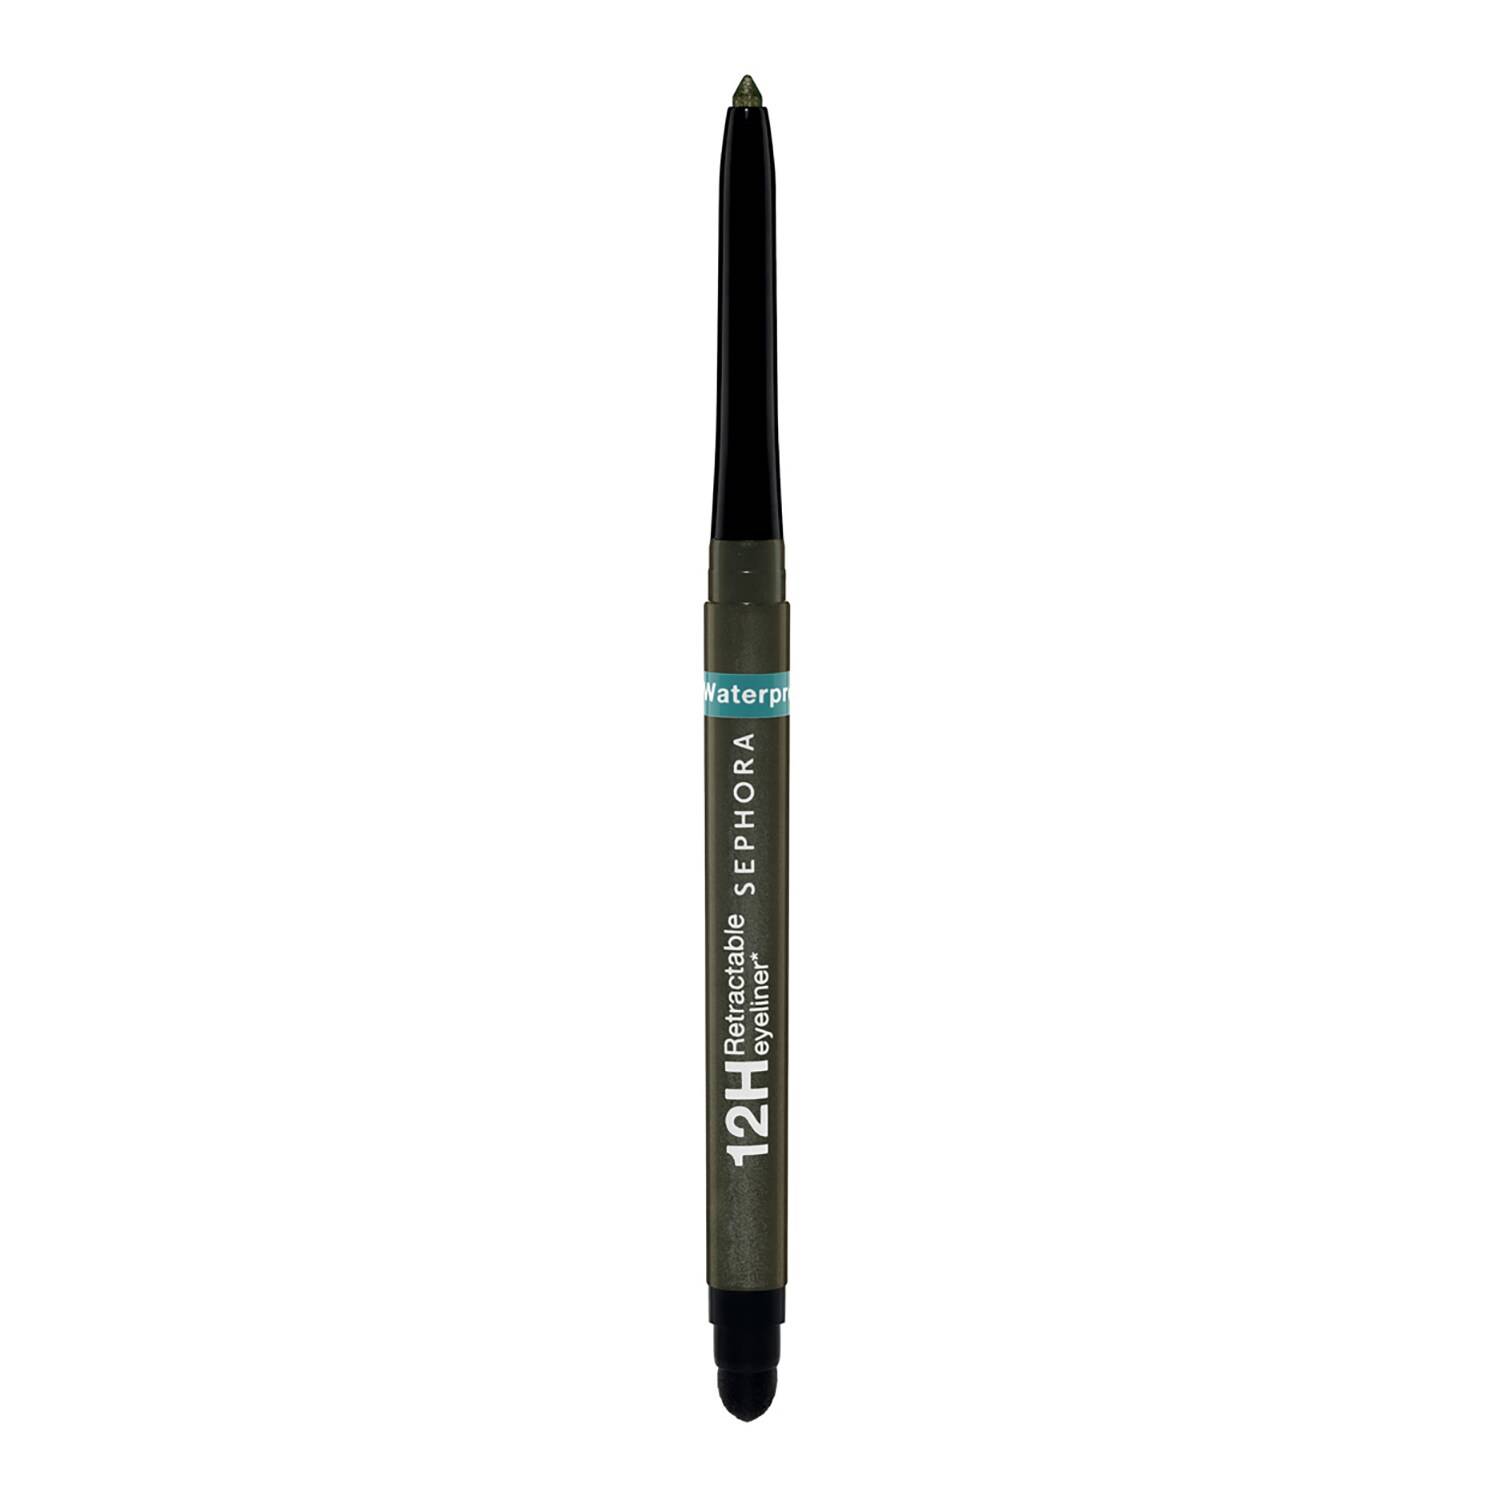 Sephora Collection Waterproof 12H Retractable Eyeliner Pencil 0.3G 14 Shimmer Khaki Green